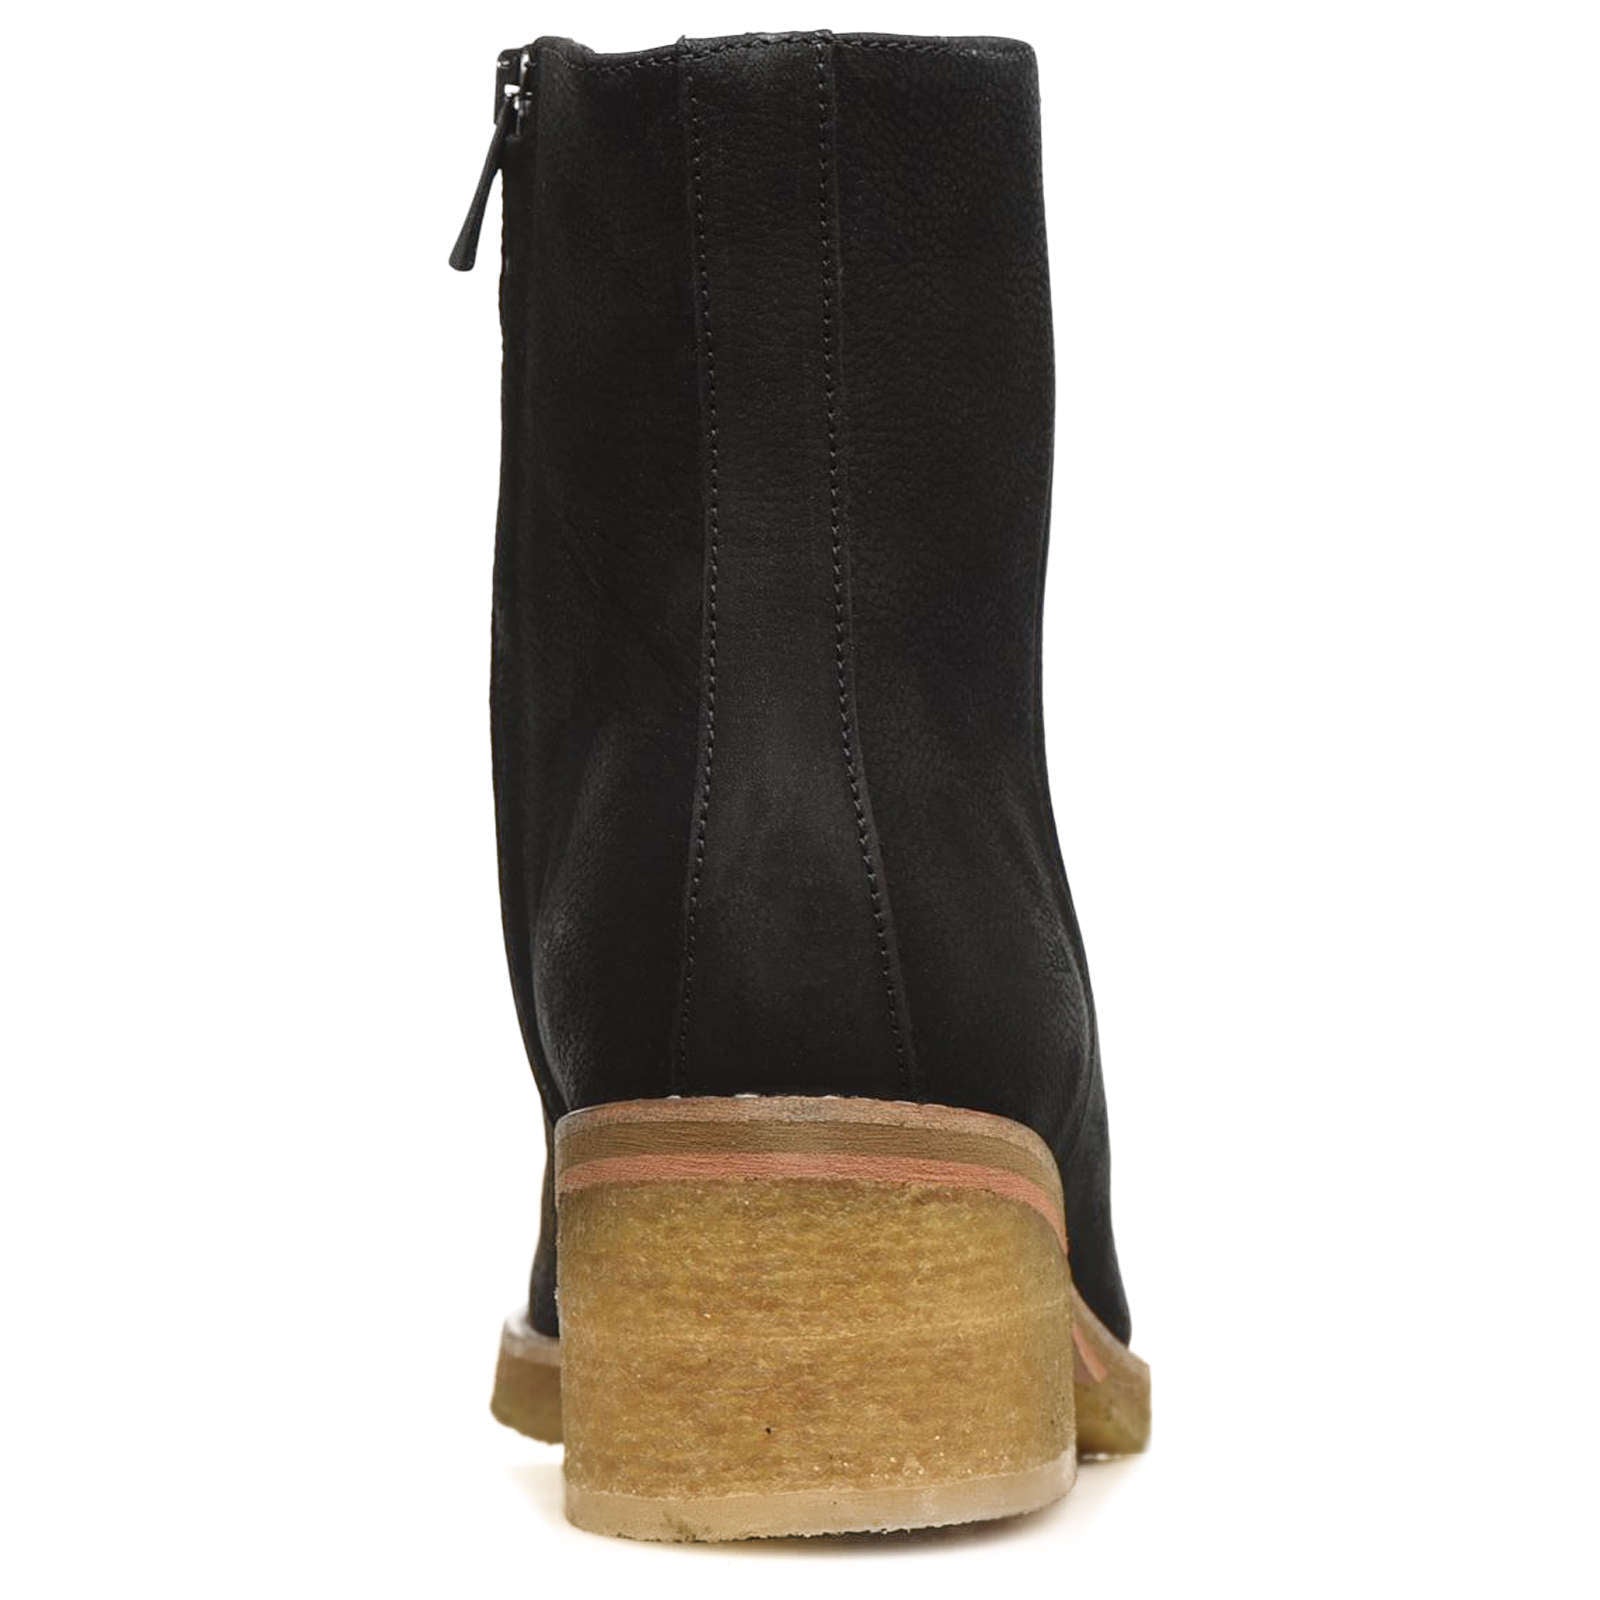 Clarks Originals Amara Crepe Nubuck Leather Women's Heeled Ankle Boots#color_black